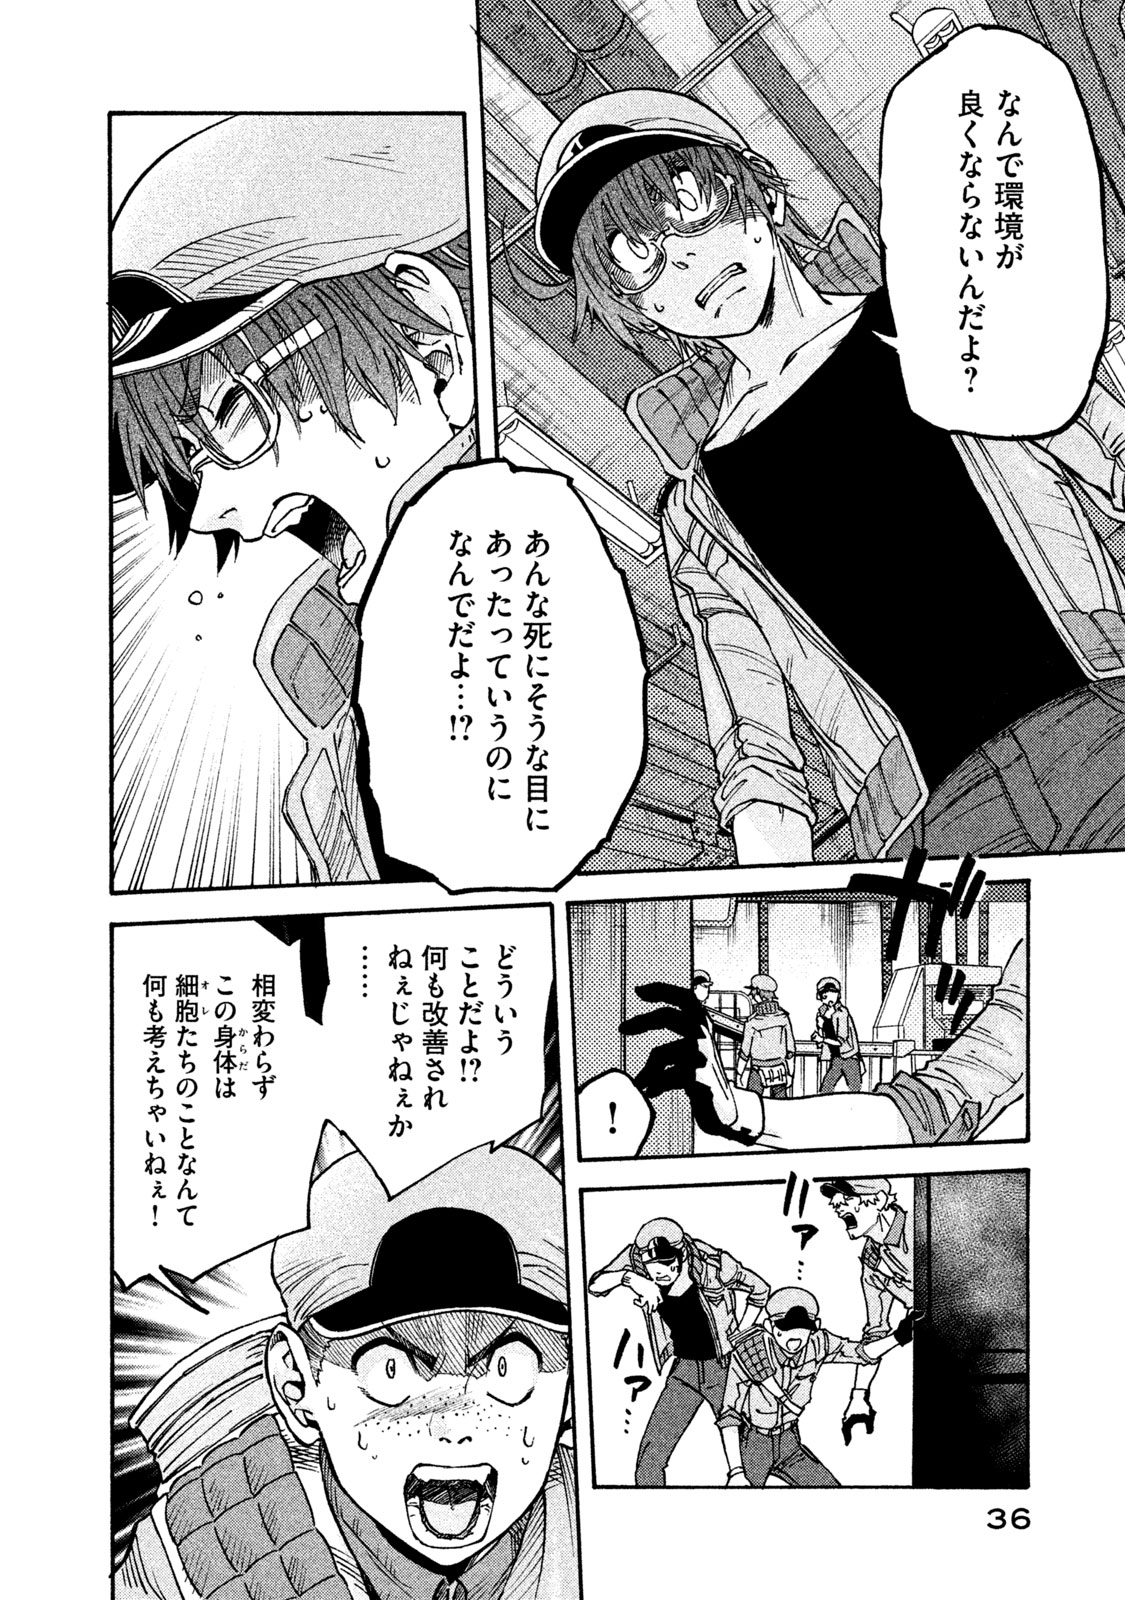 Hataraku Saibou BLACK - Chapter 19 - Page 15